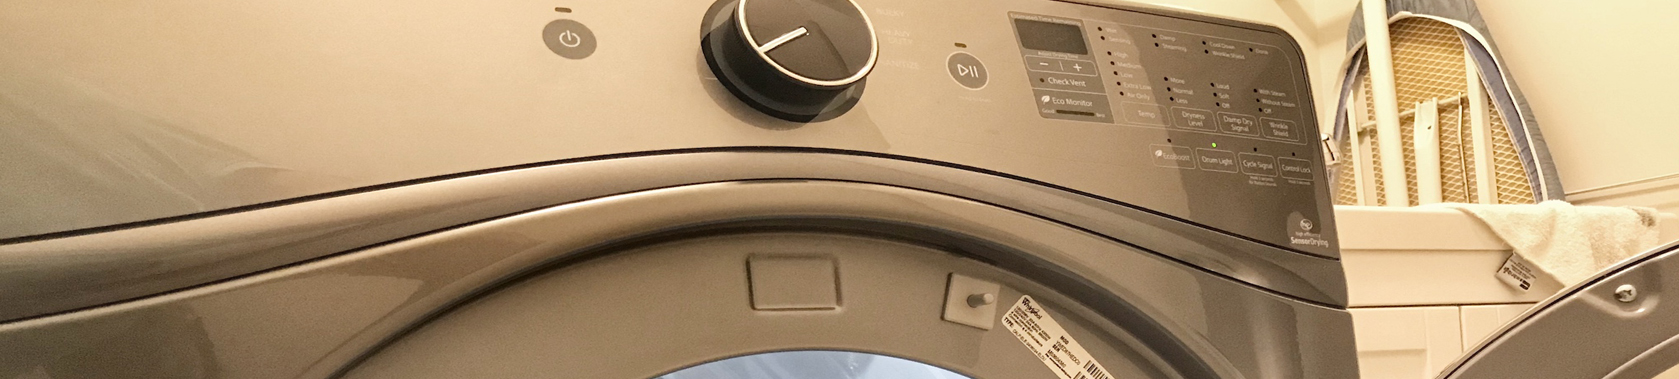 Washing Machine Repair in Airdrie